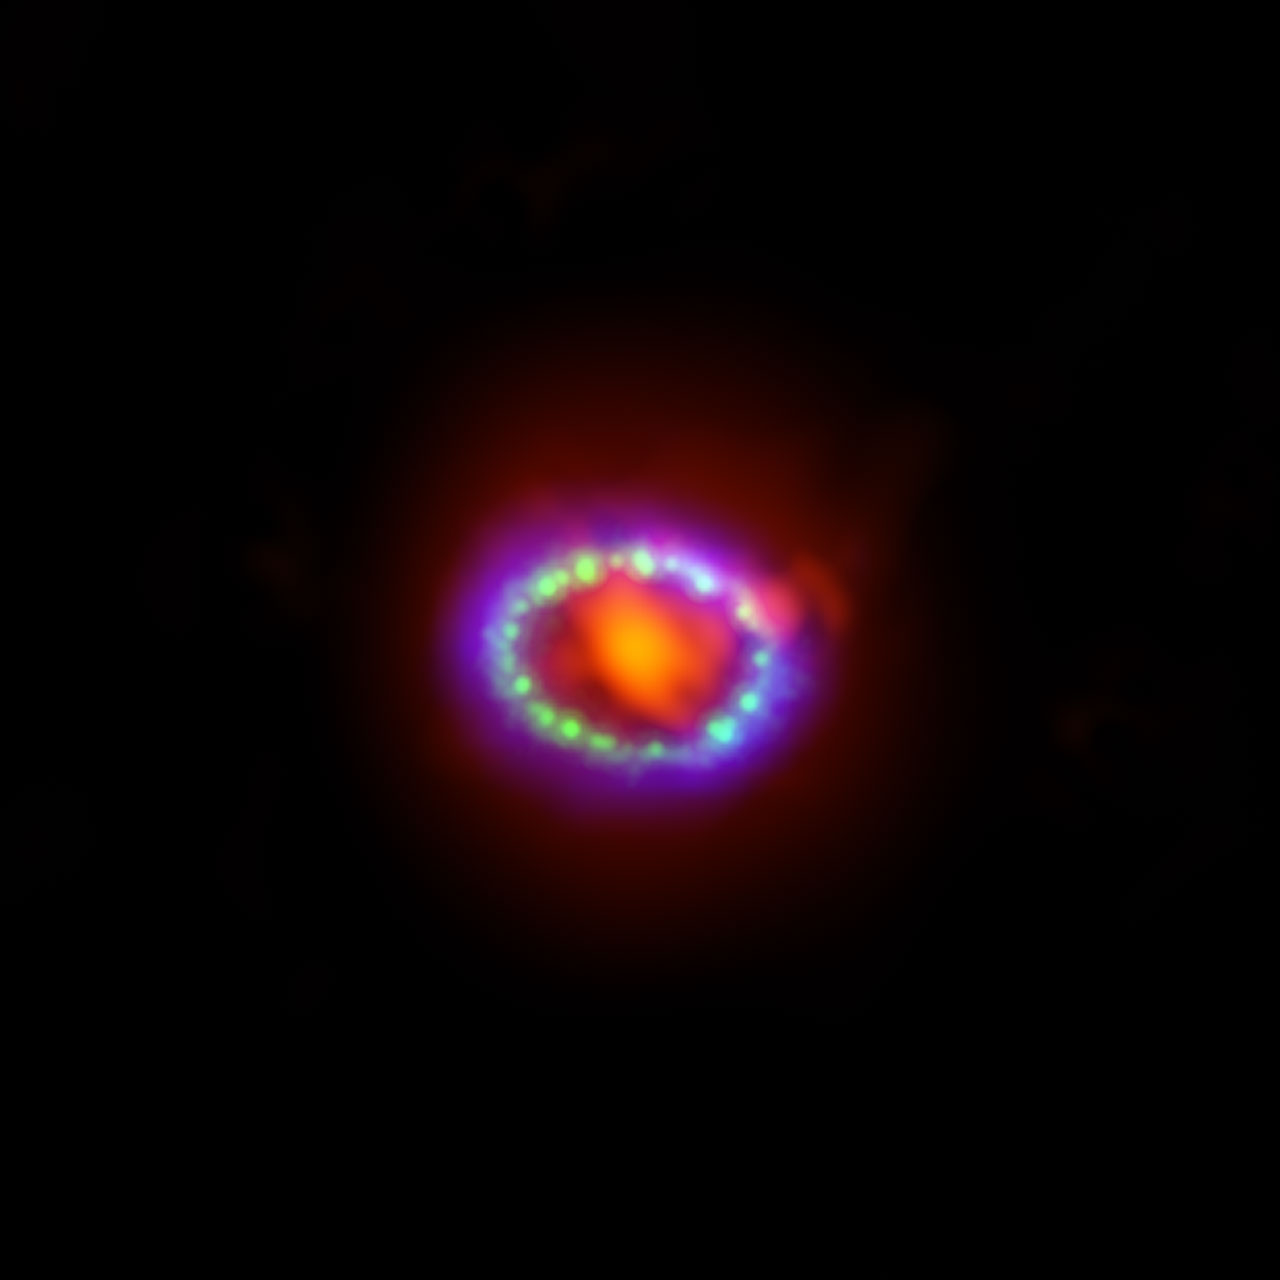 ALMA Spots Supernova Dust Factory